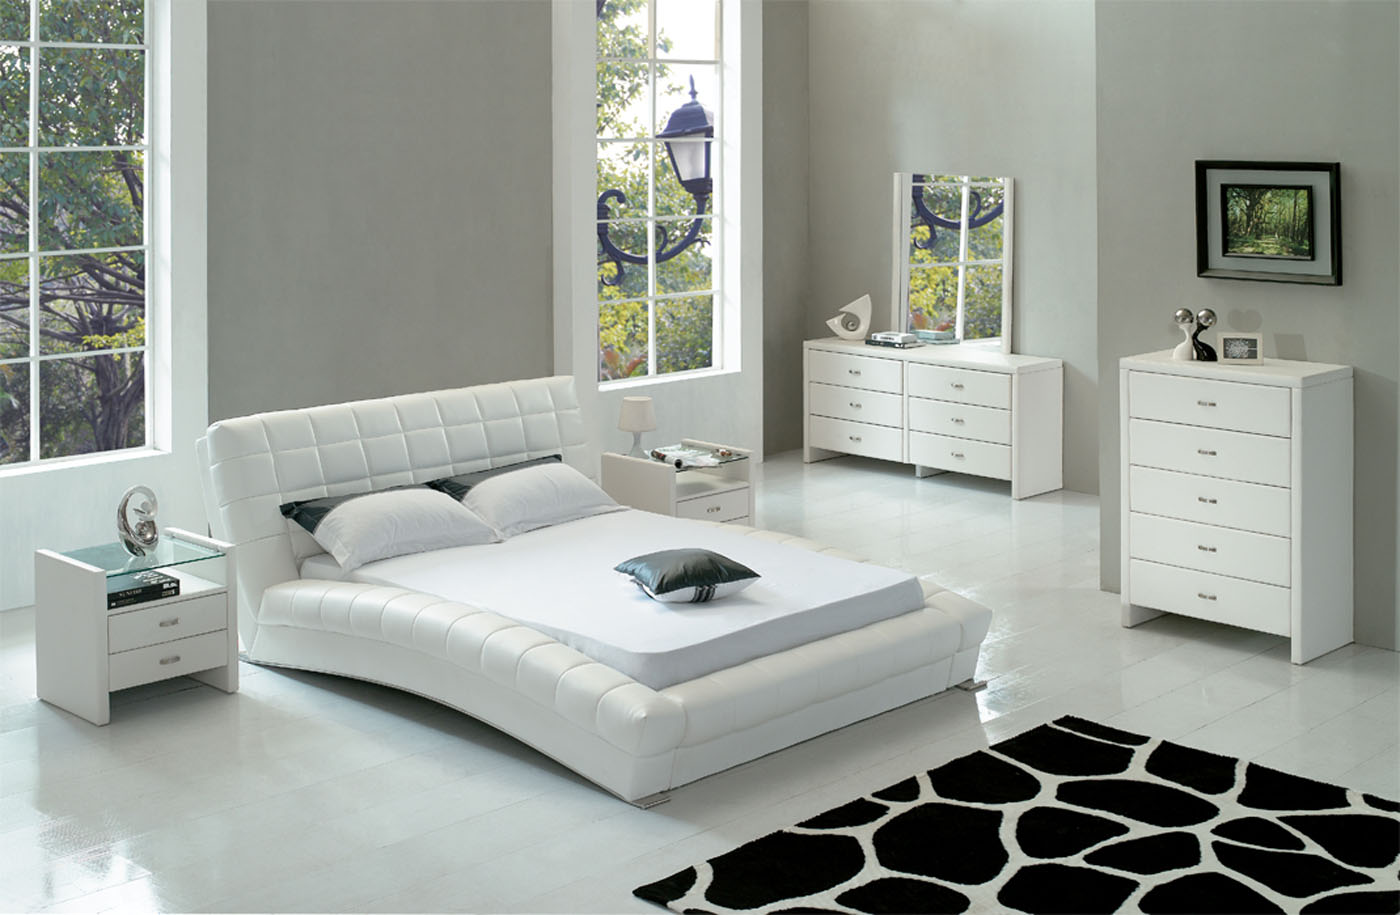 refinish white bedroom furniture